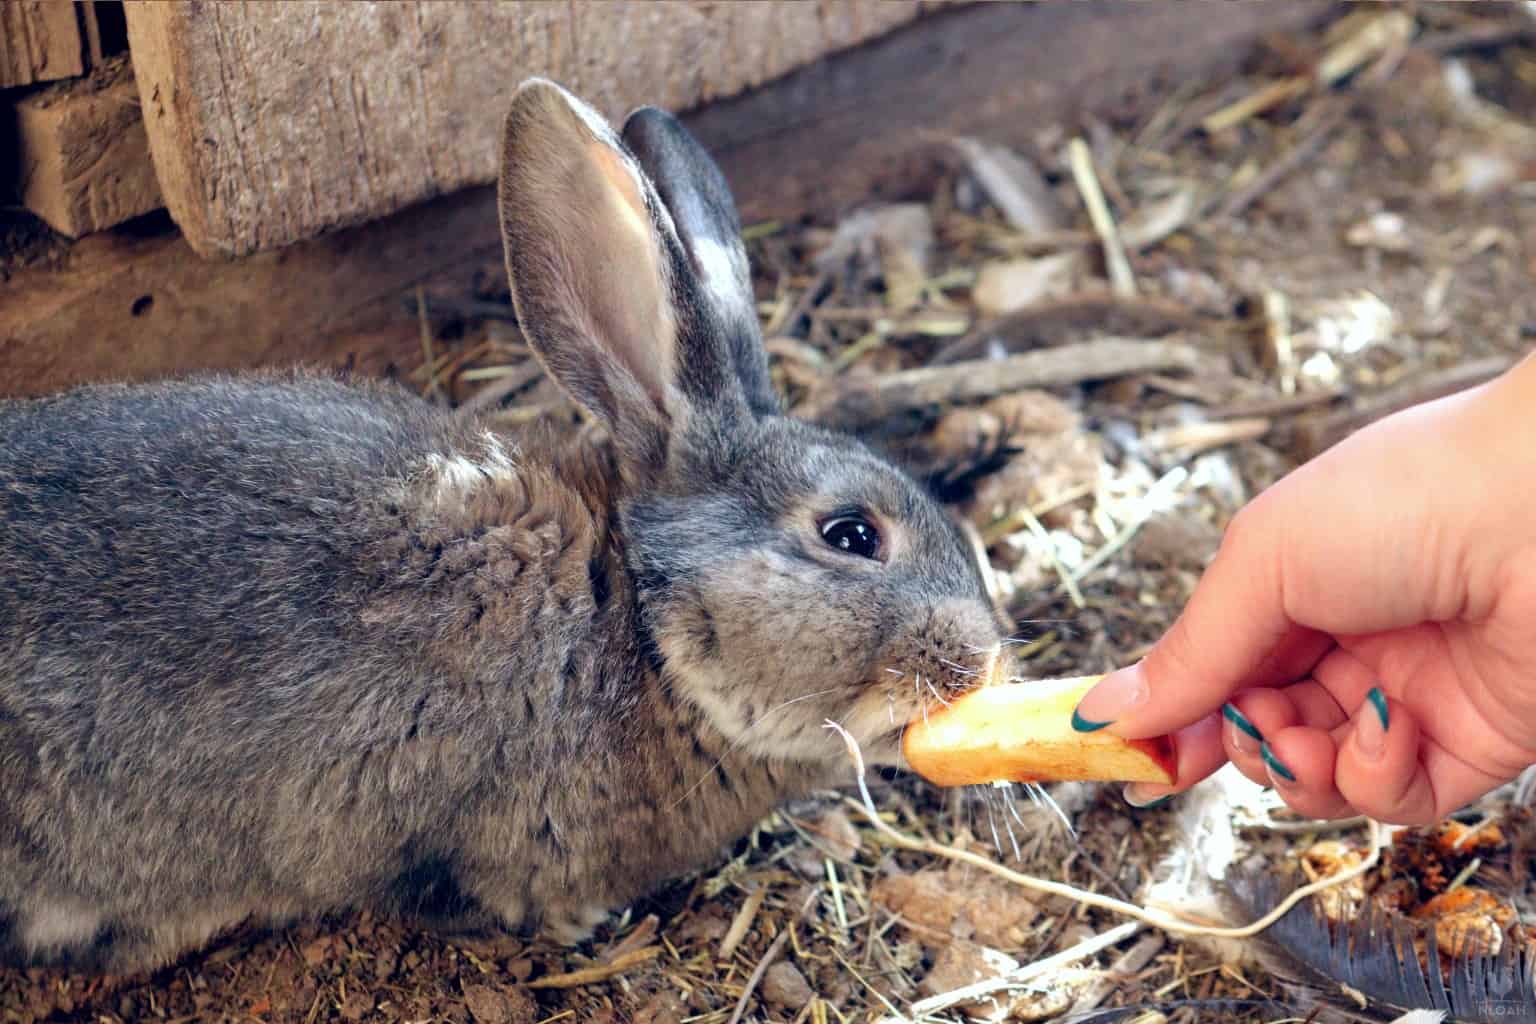 rabbit eating an apple slice